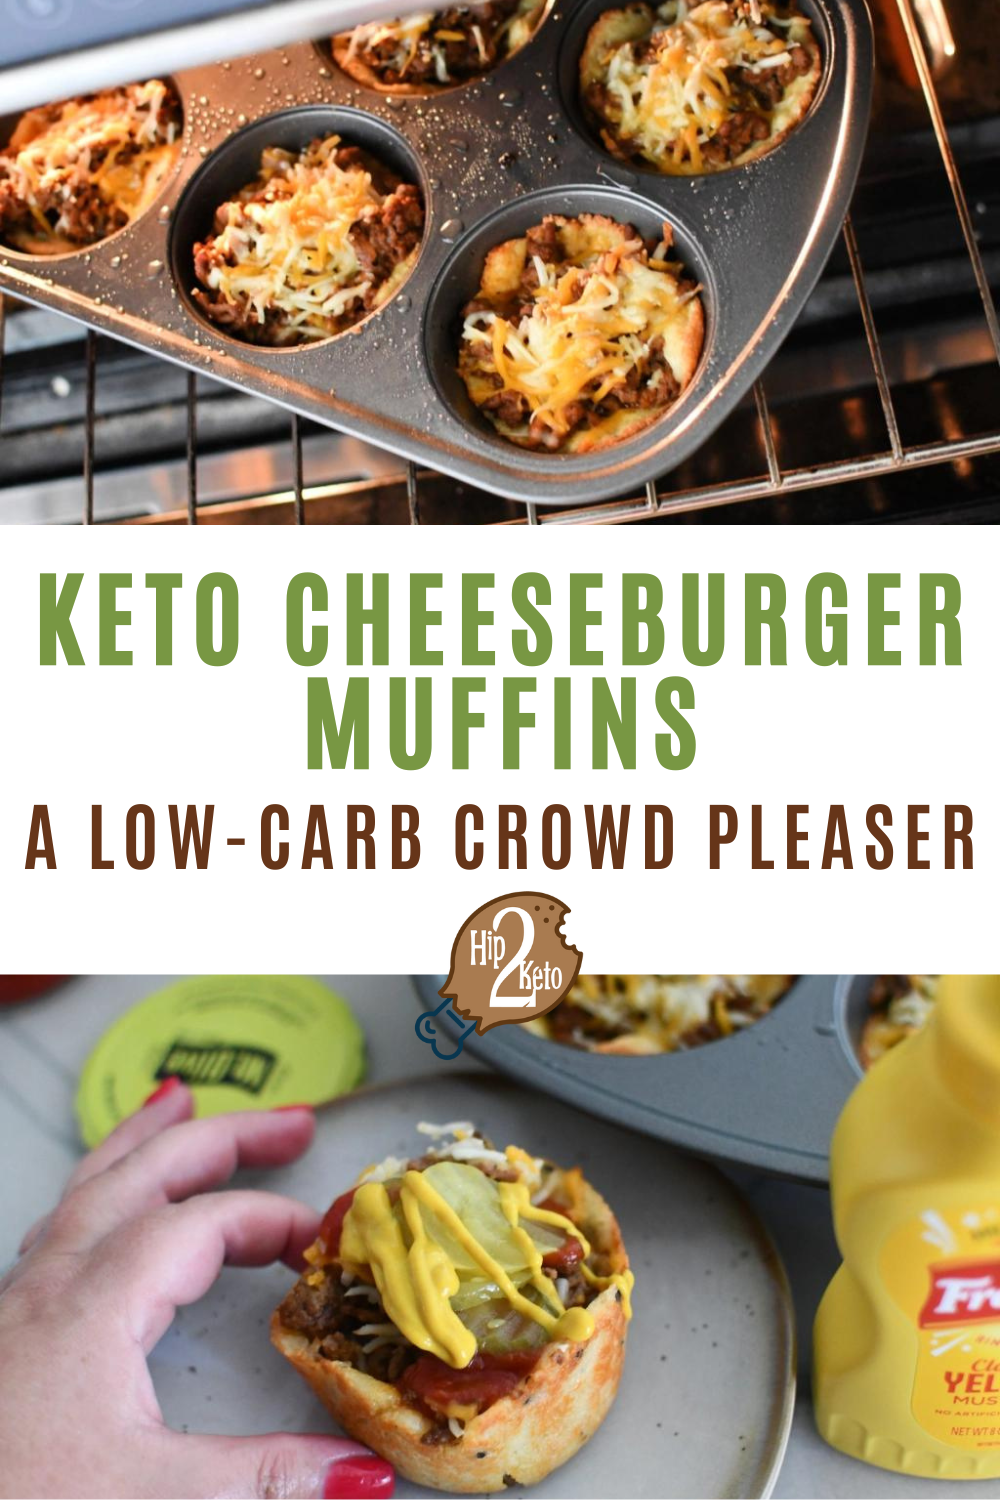 Keto Cheeseburger Muffins are a Crowd-Pleaser | Hip2Keto